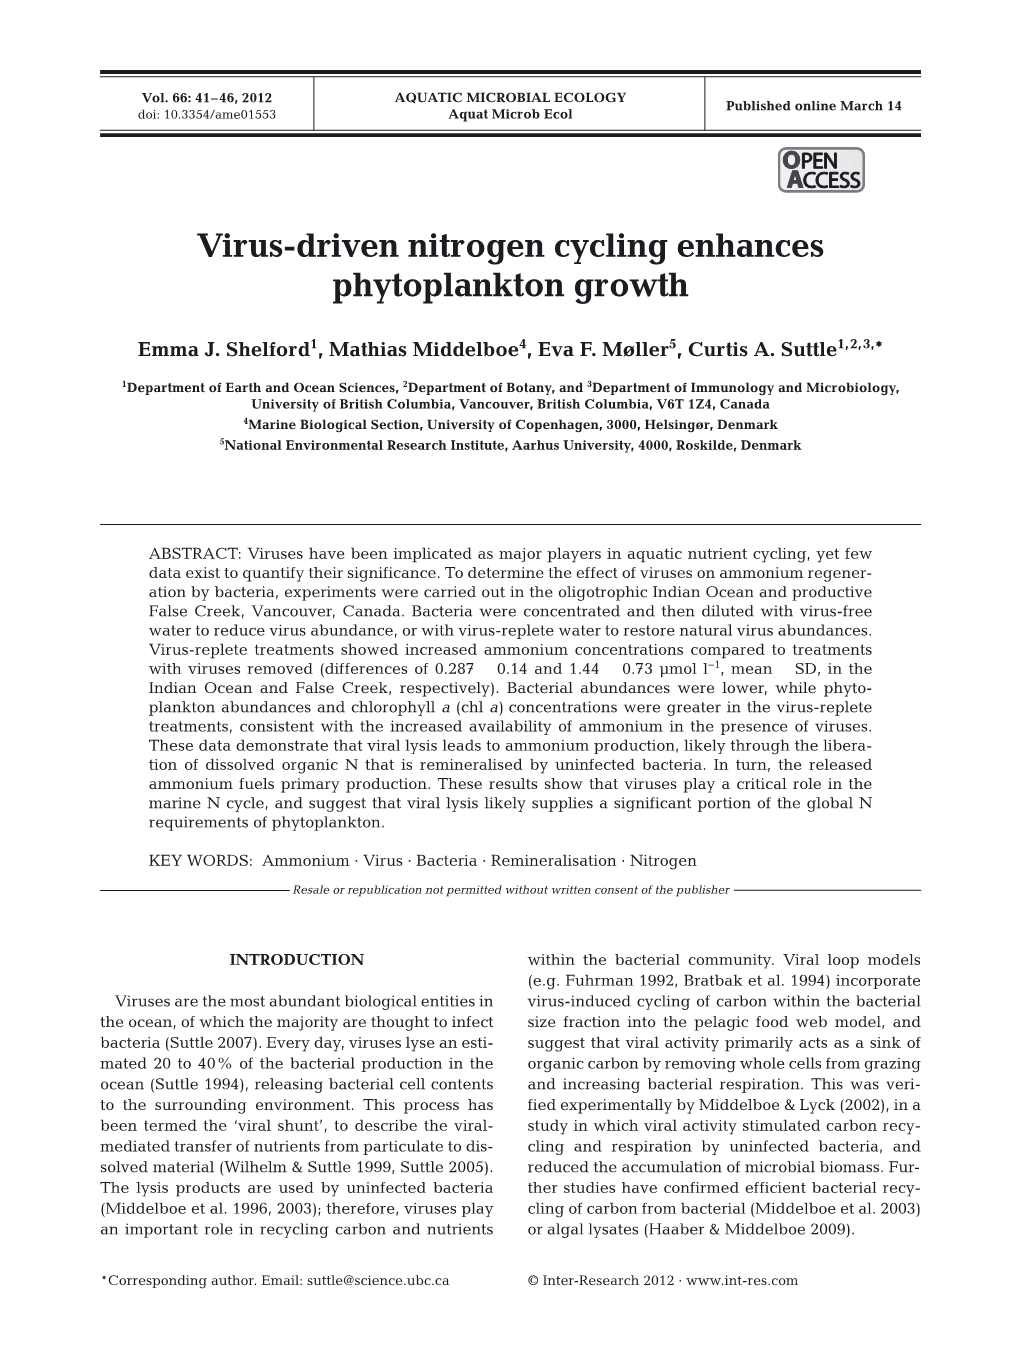 Virus-Driven Nitrogen Cycling Enhances Phytoplankton Growth